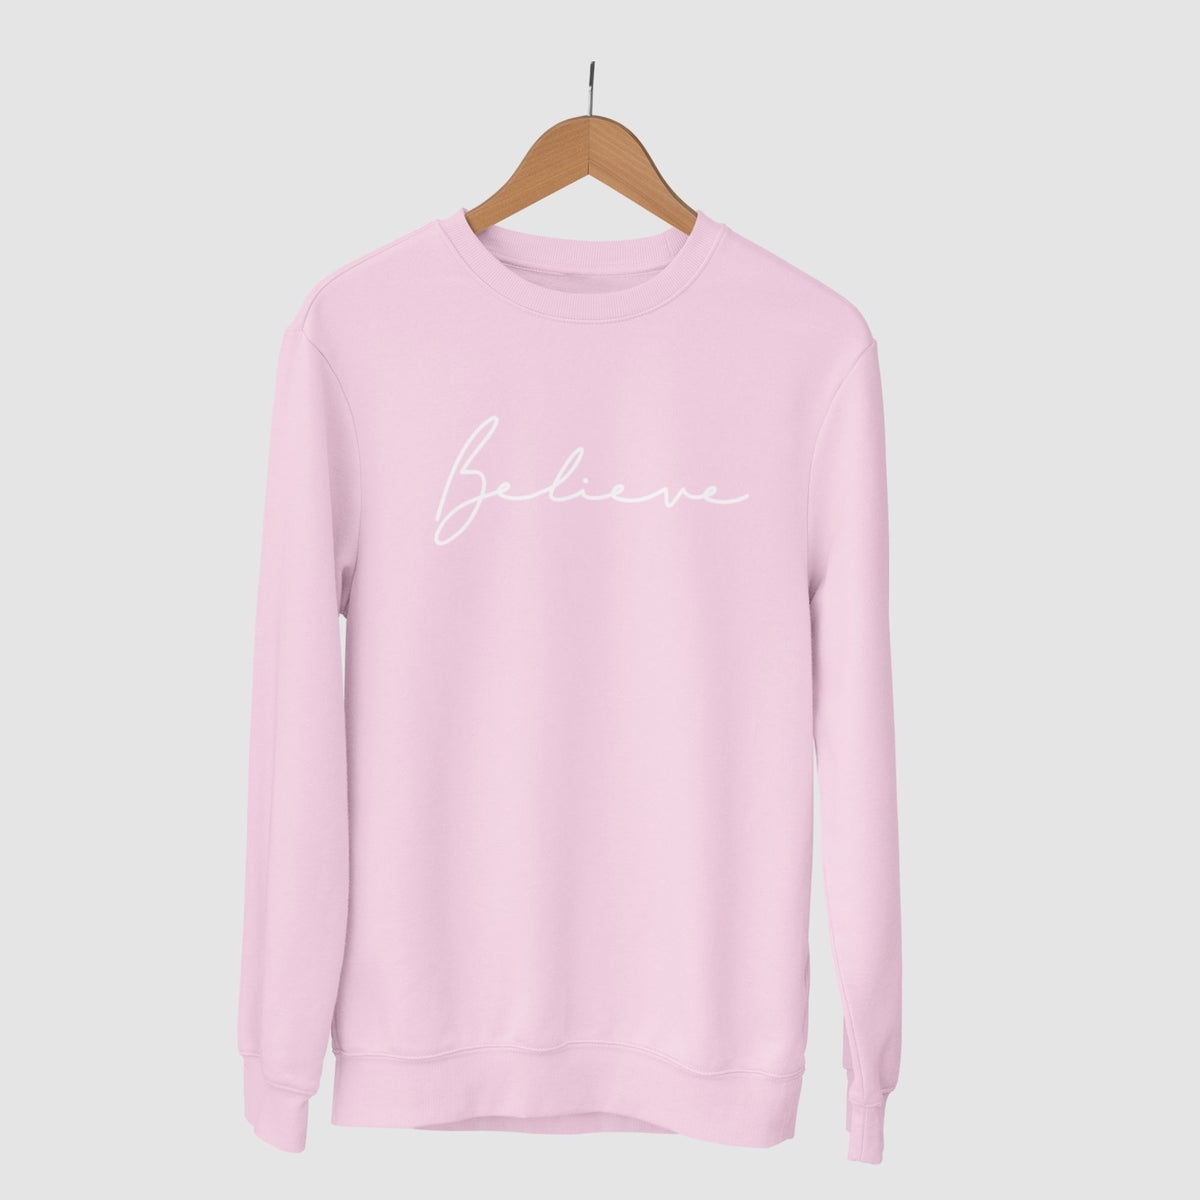 believe-cotton-printed-unisex-light-pink-sweatshirt-gogirgit-com